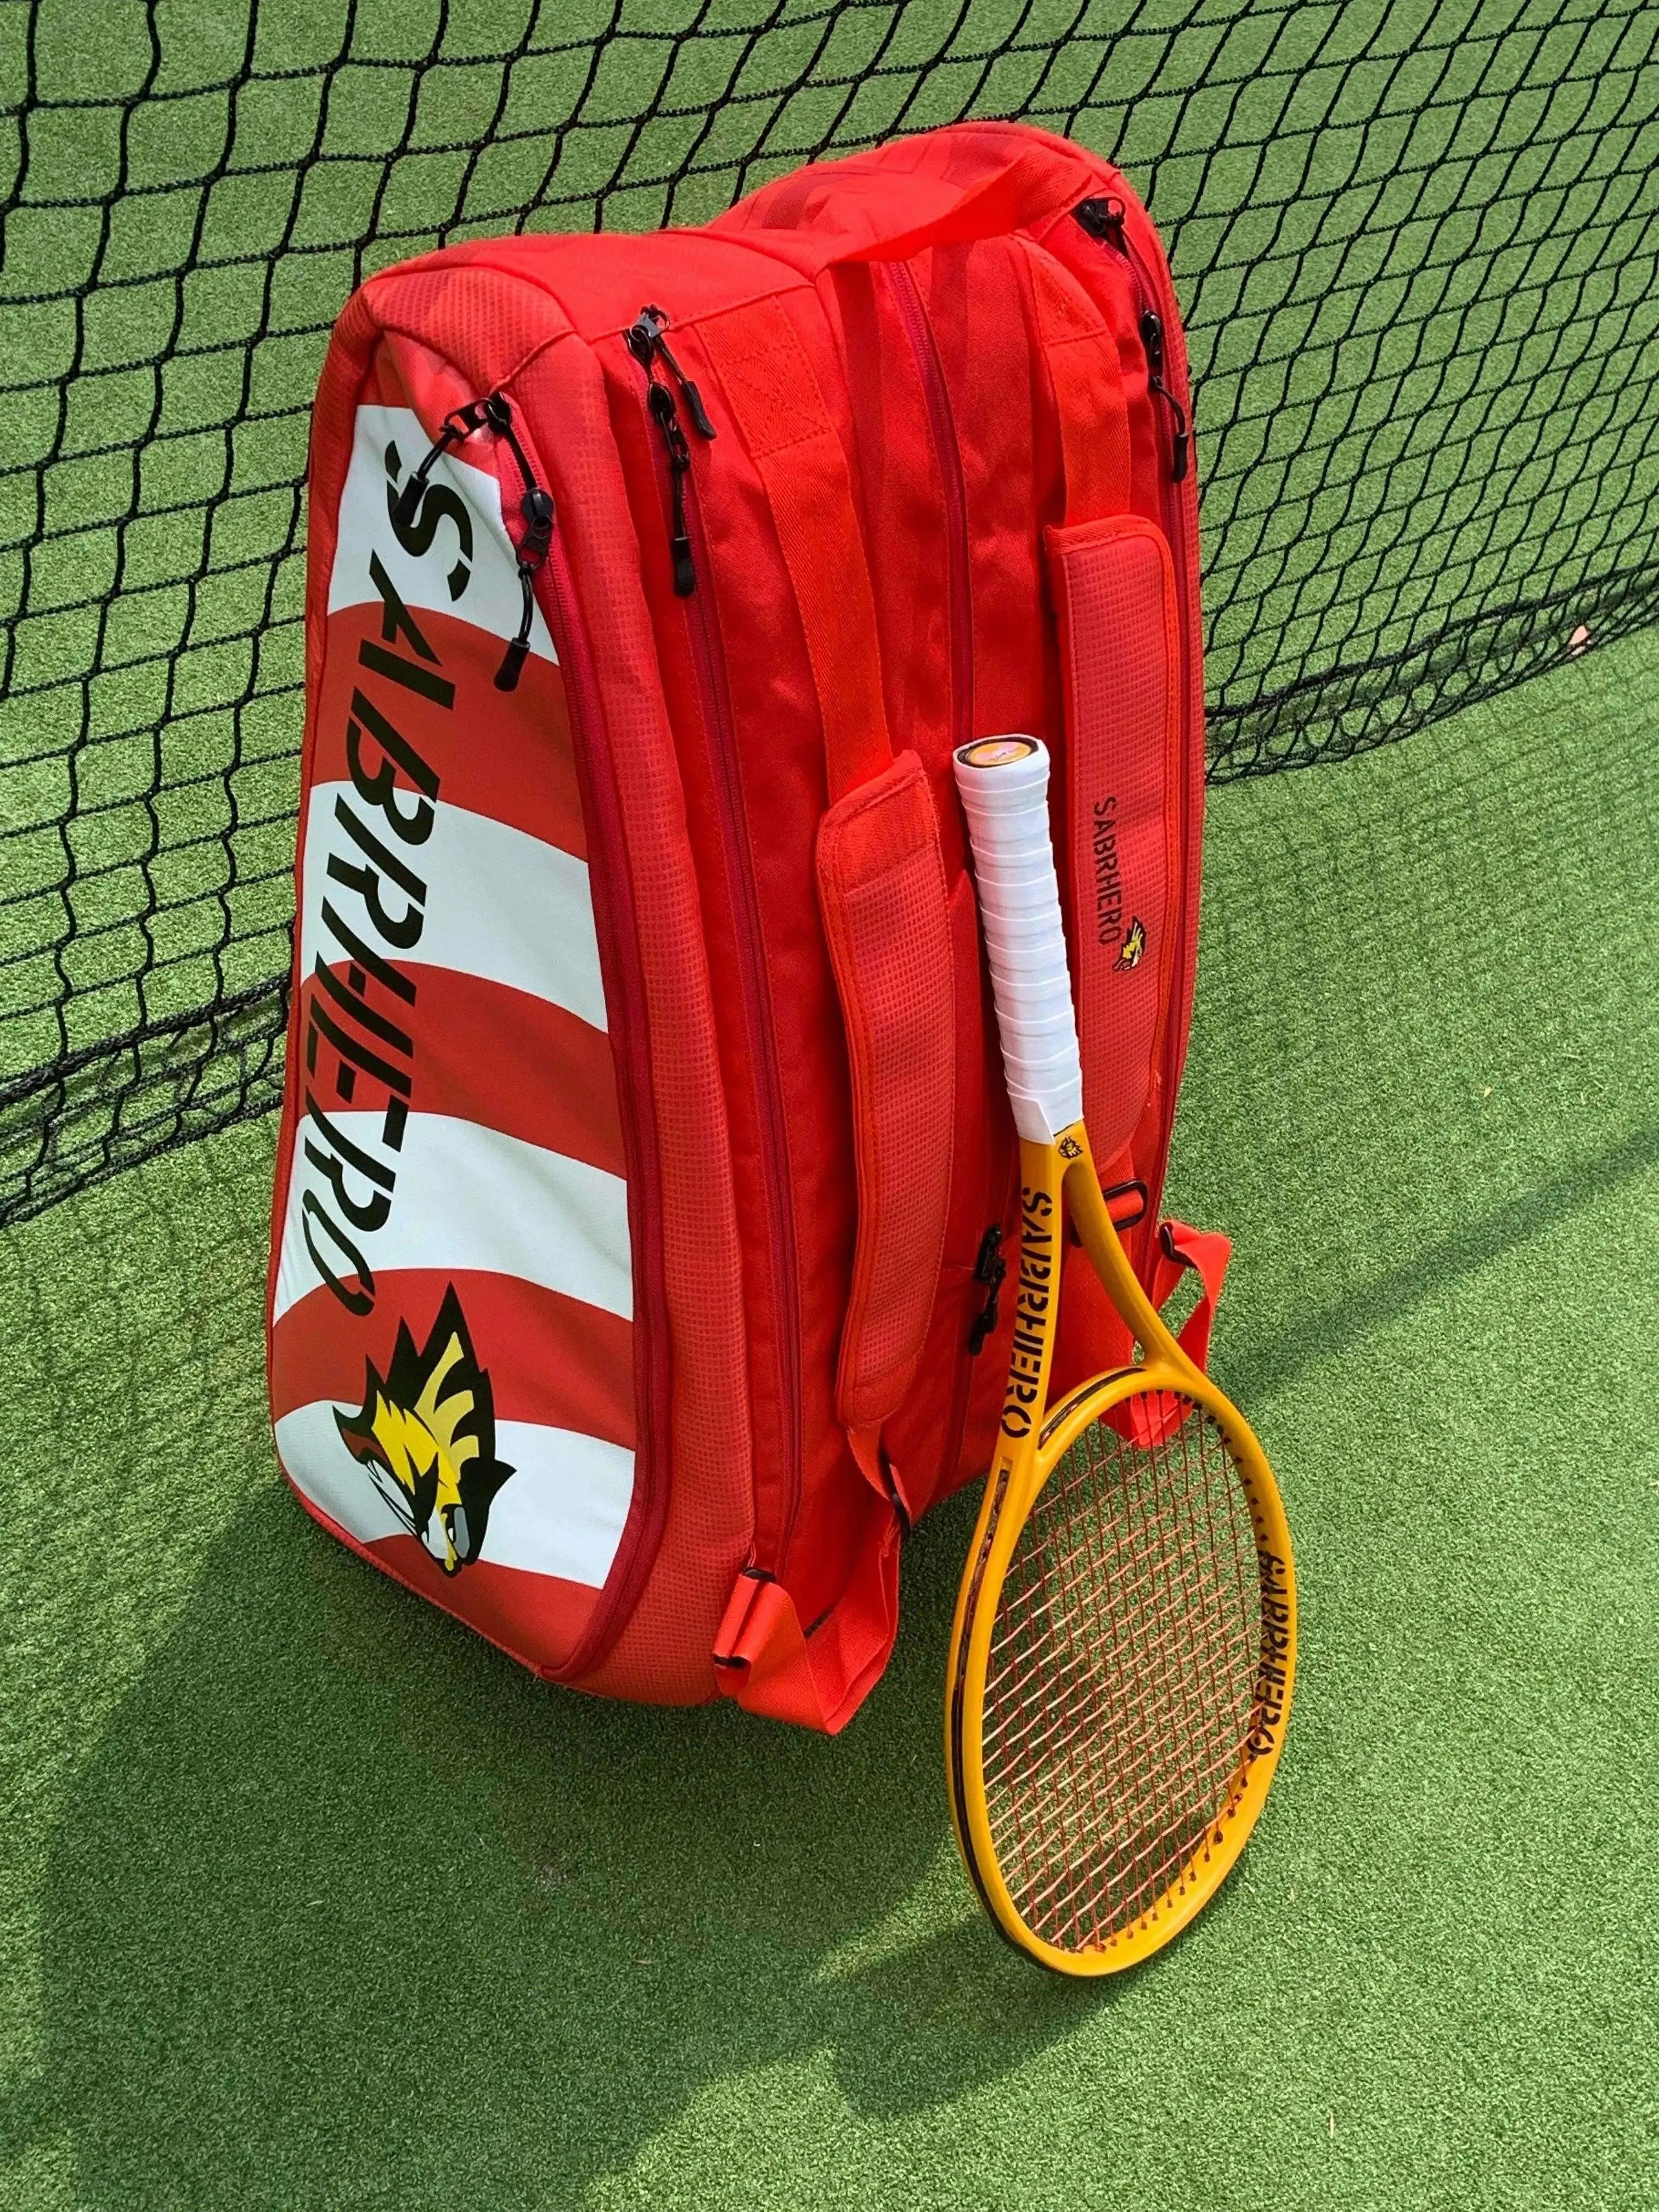 SABRHERO Inner Power Thermobag 15 rackets - Luxury tennis bag Tennis Racquet Bags SABRHERO